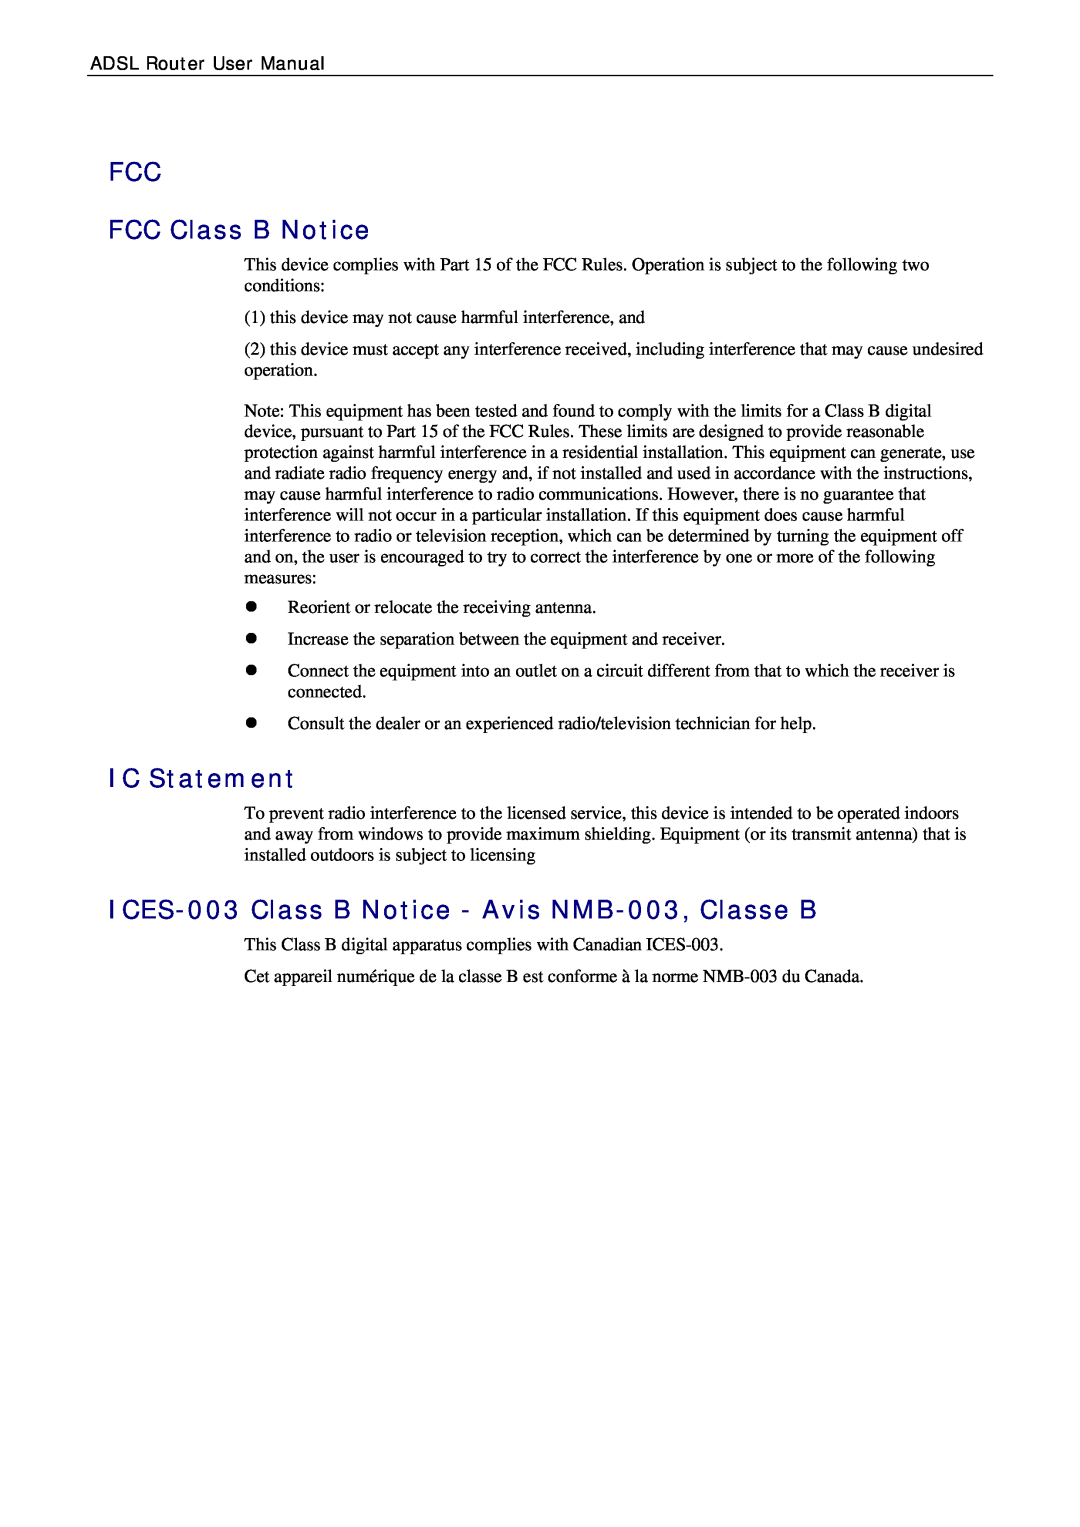 Siemens CL-010-I manual FCC FCC Class B Notice, IC Statement, ICES-003 Class B Notice - Avis NMB-003, Classe B 